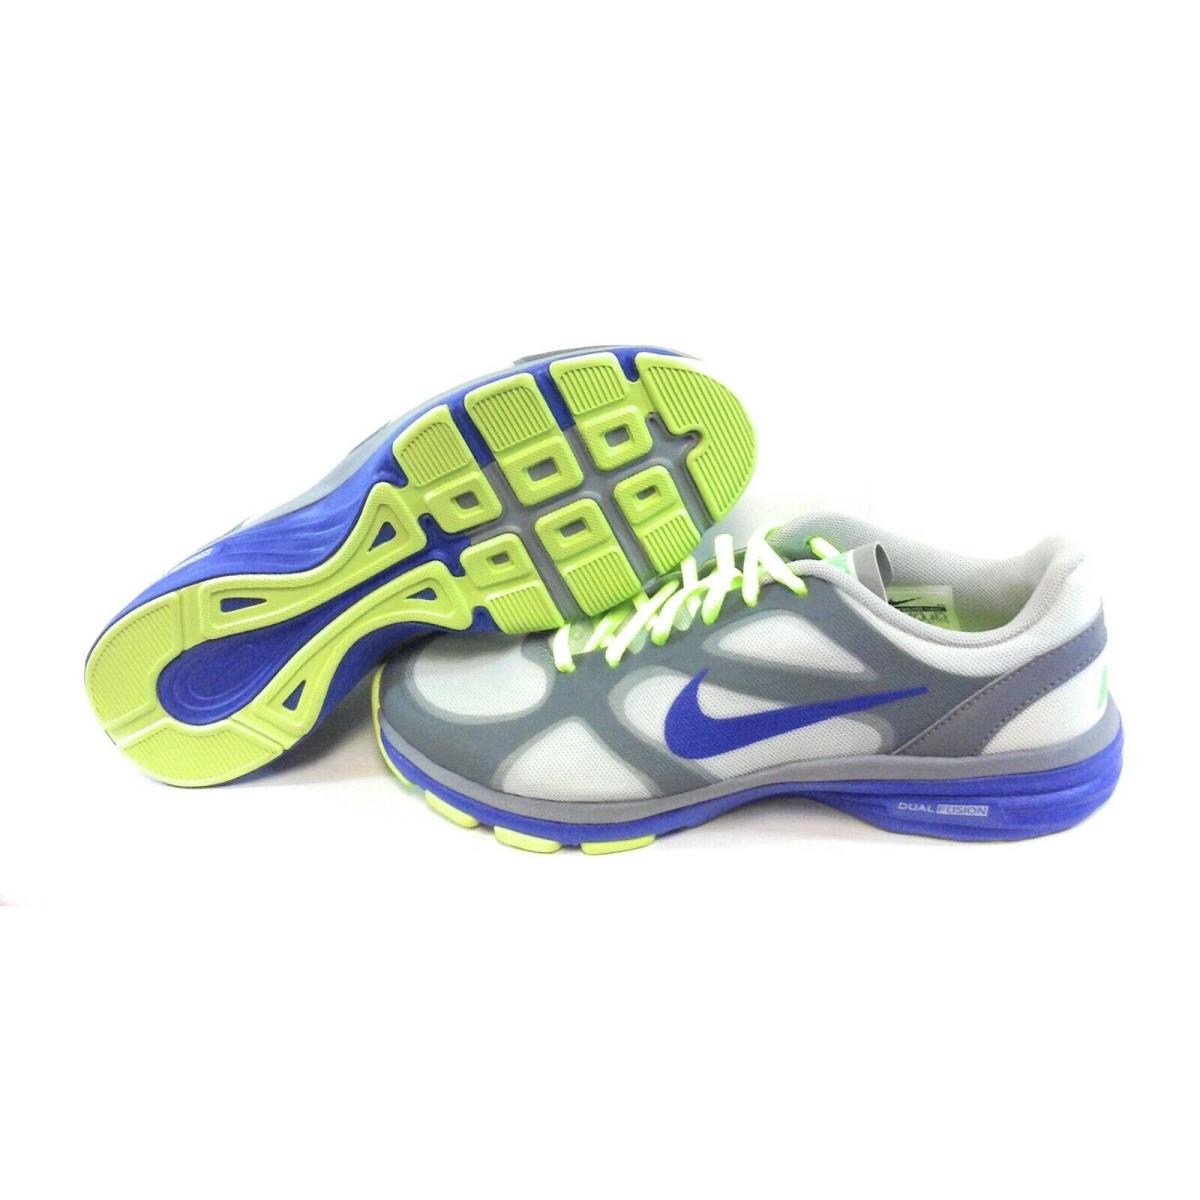 Womens Nike Dual Fusion Run TR 443837 011 Grey Volt Purple 2013 Sneakers Shoes